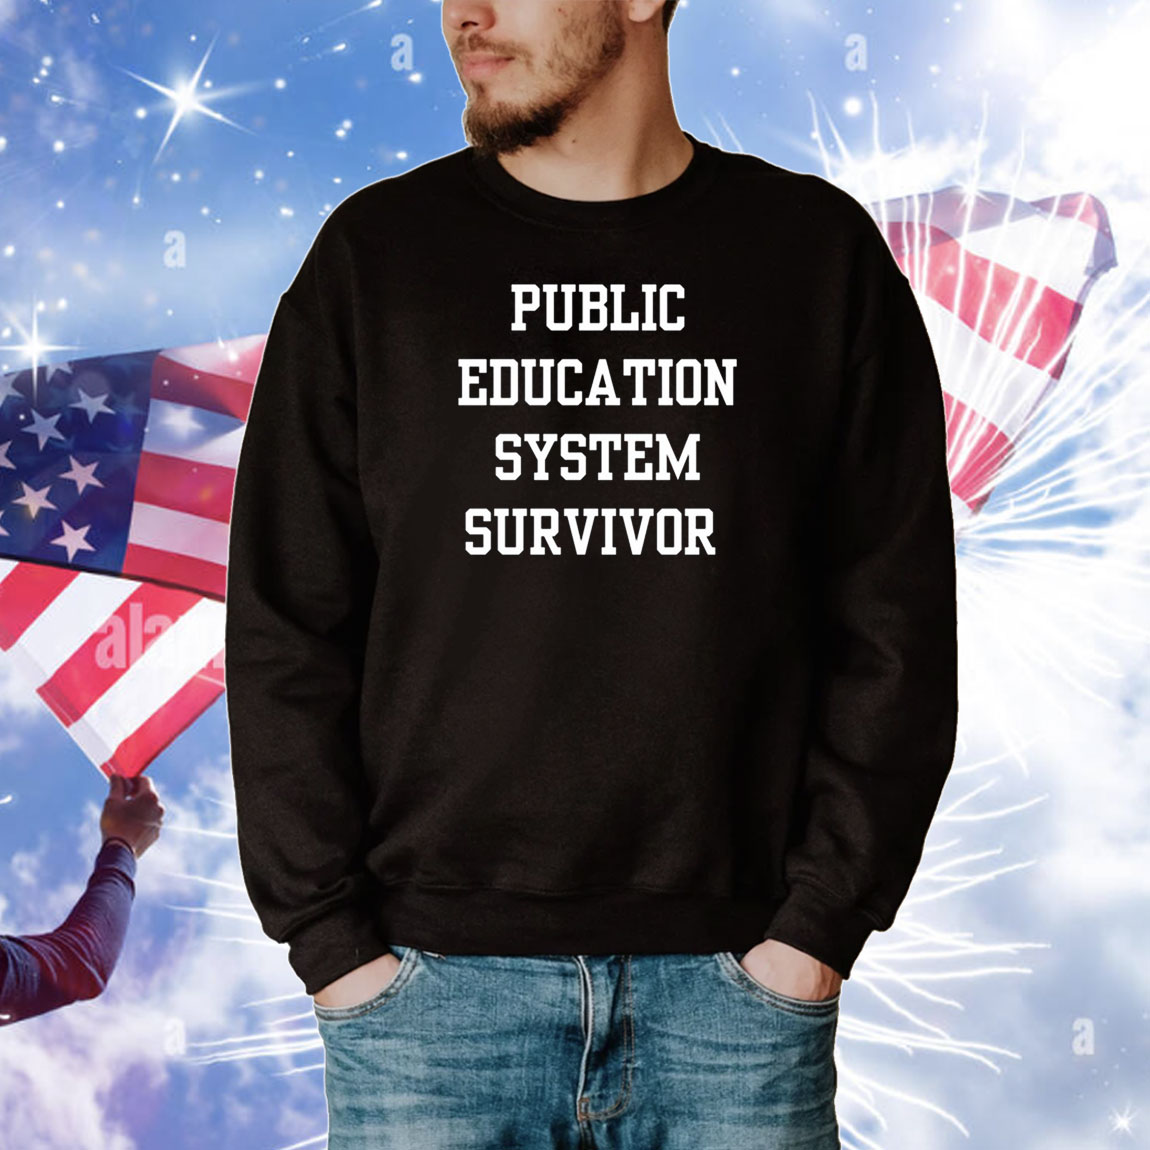 Public Education System Survivor Tee Shirts